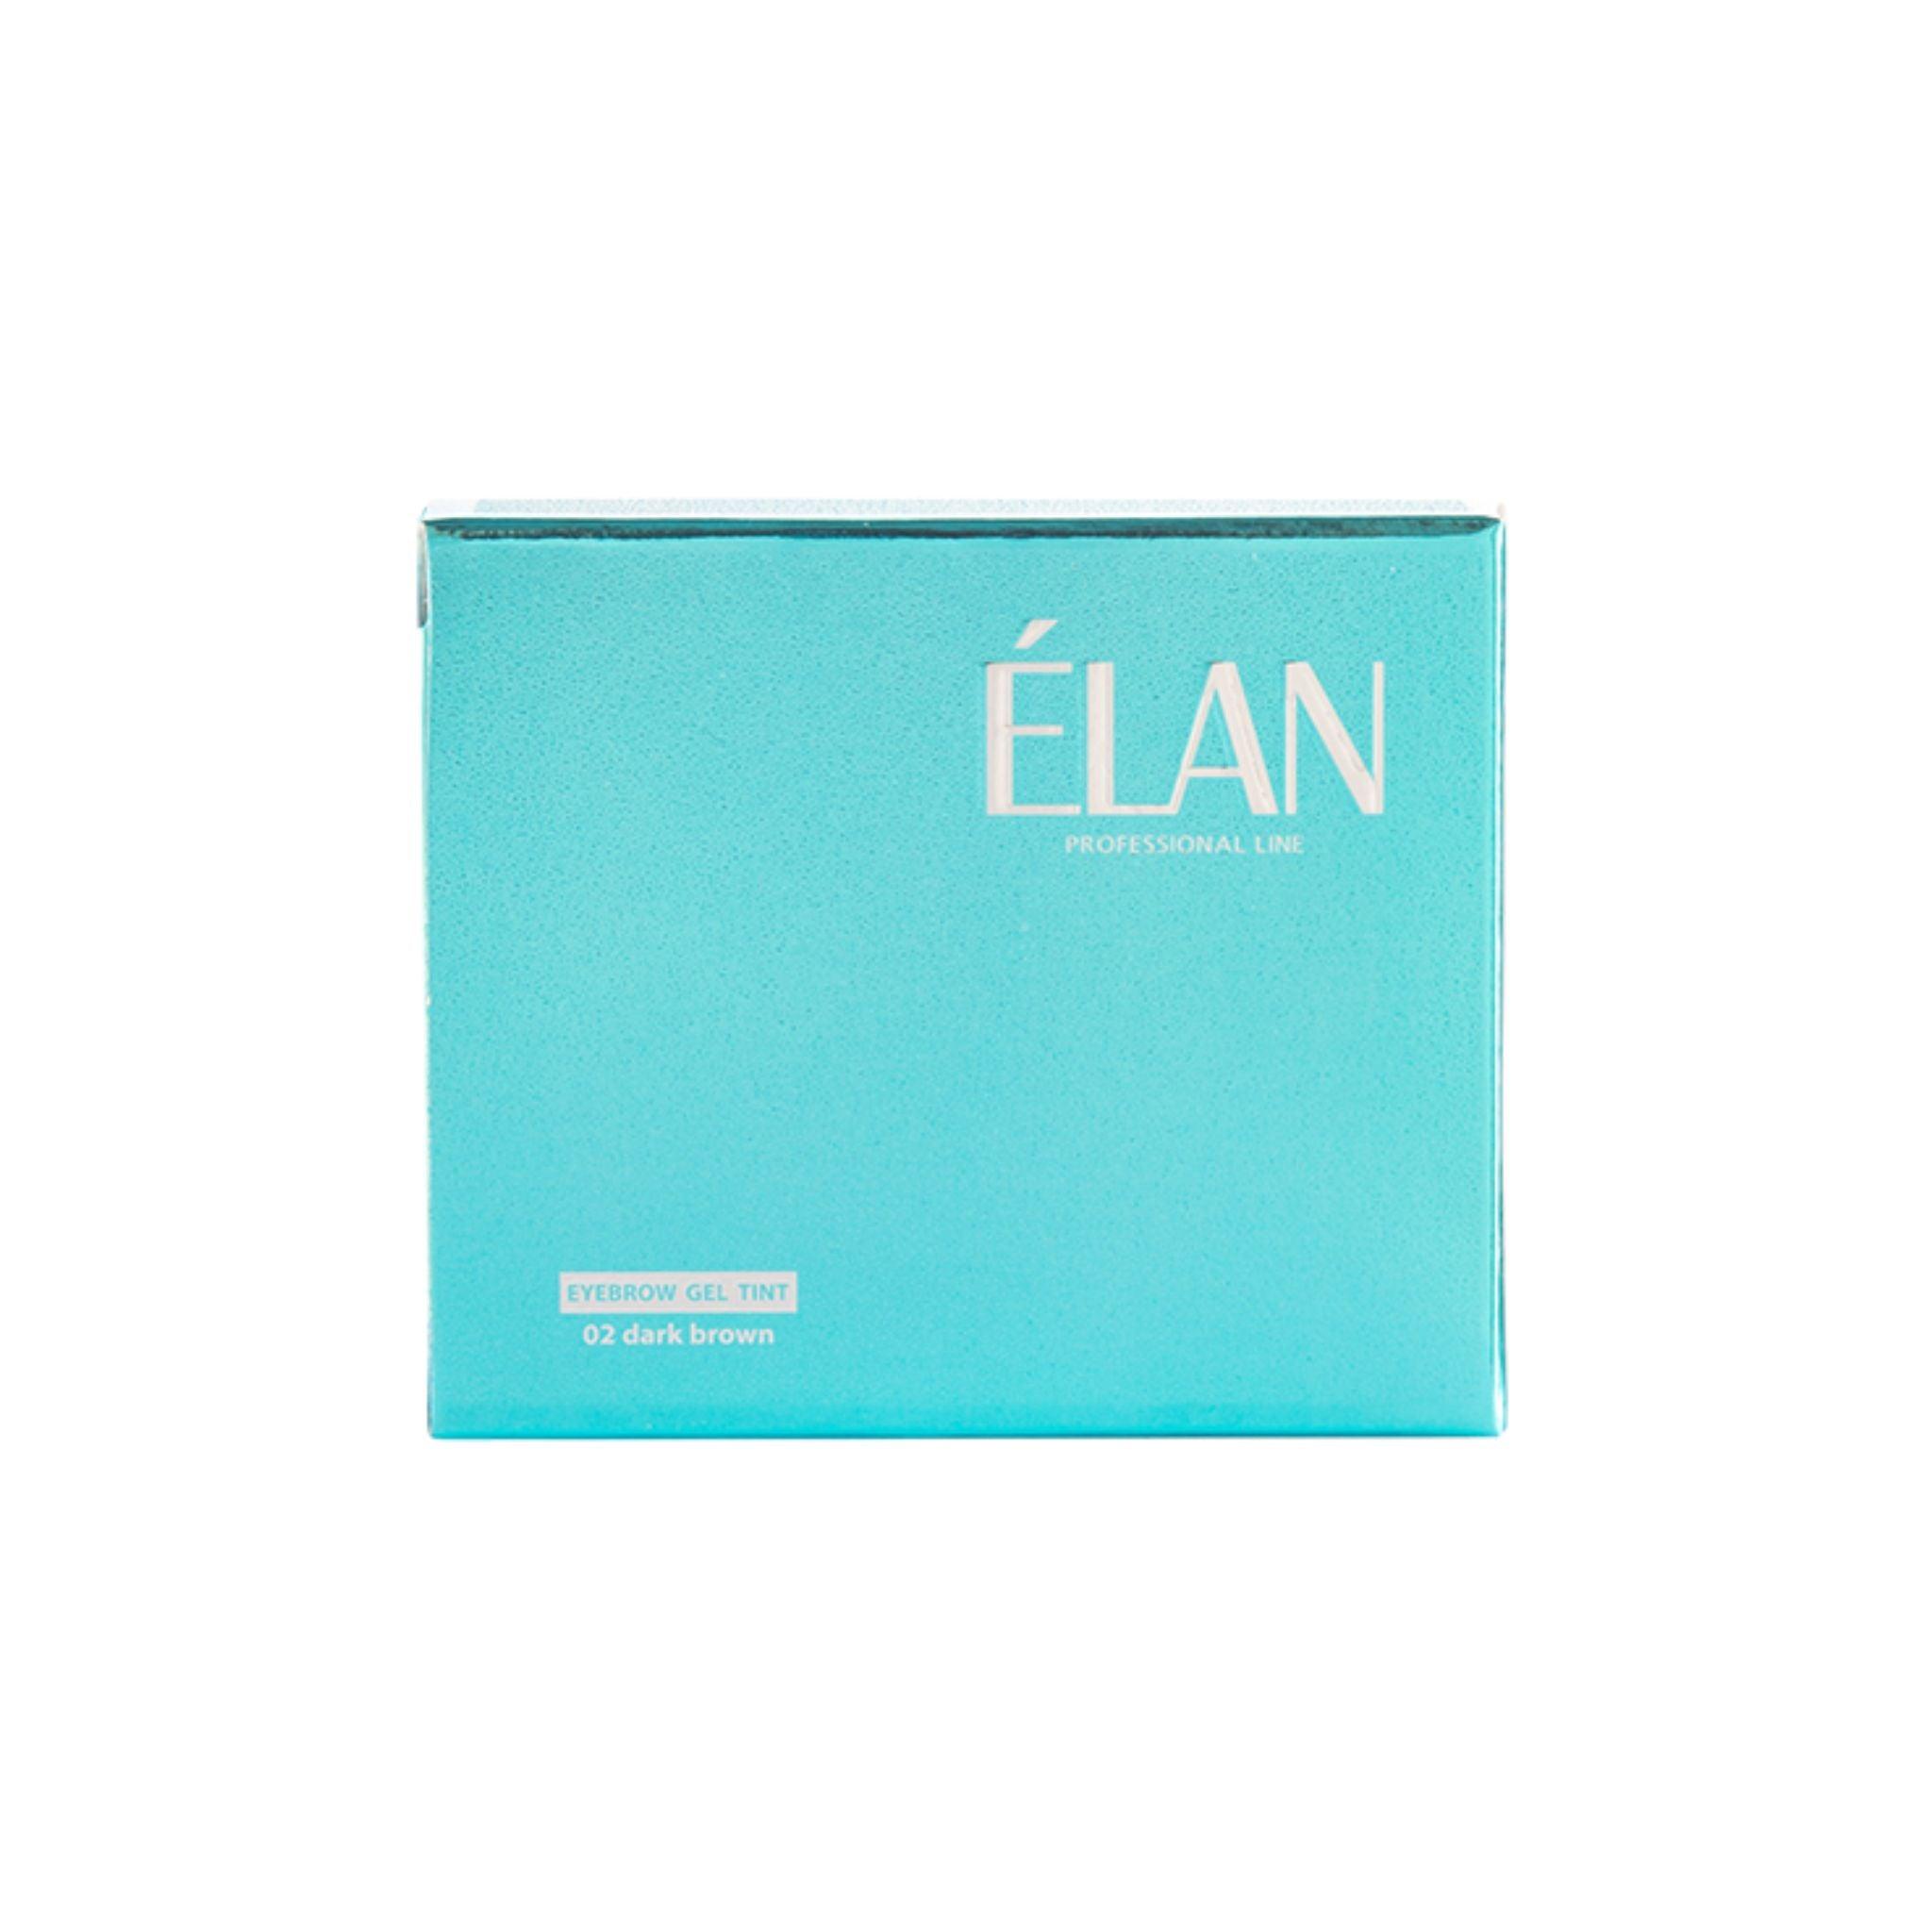 ELAN Eyebrow Gel Tint Sample - The Beauty House Shop